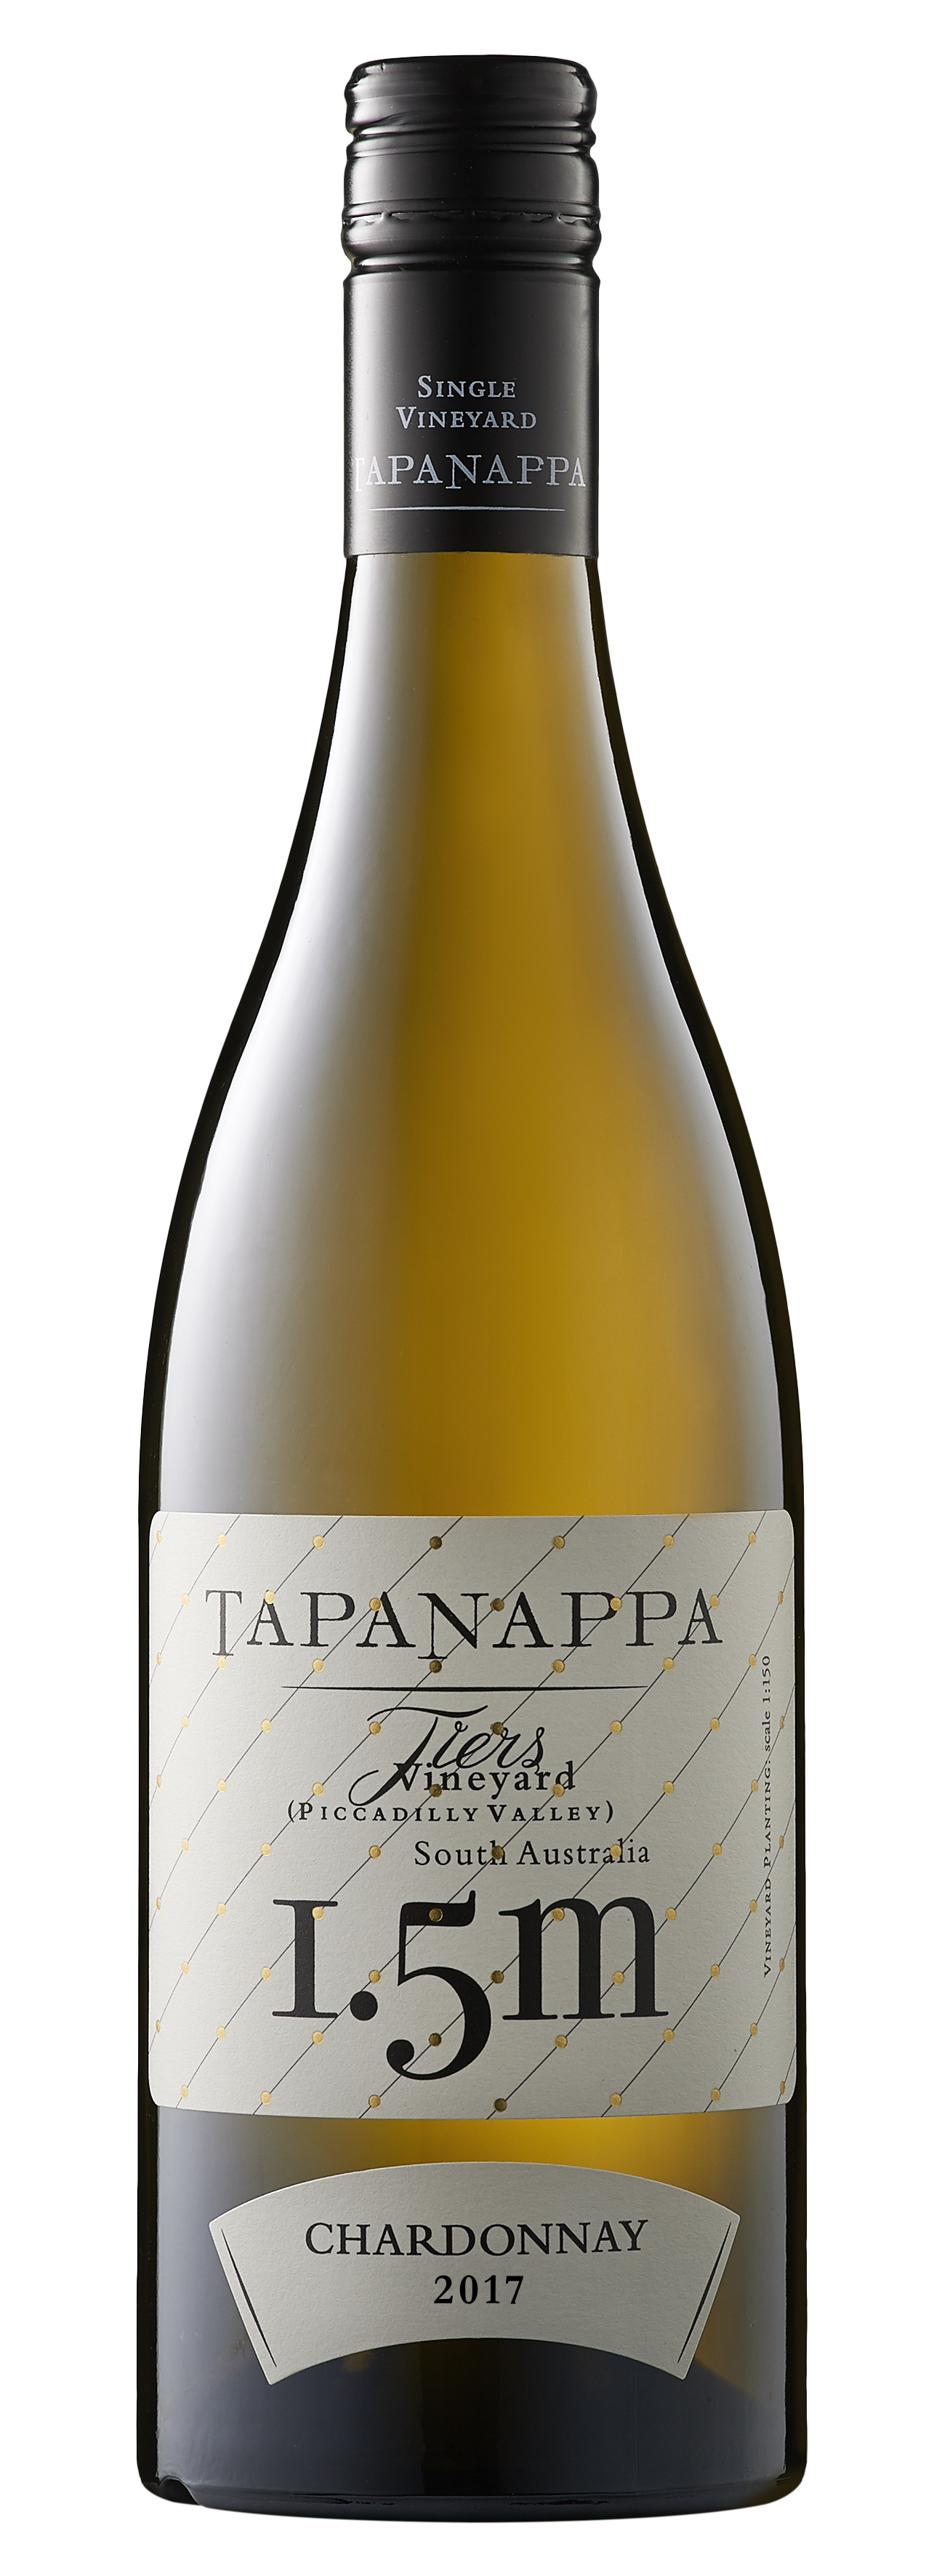 Tapanappa Tiers Vineyard 1.5m 2017 Chardonnay bottle shot